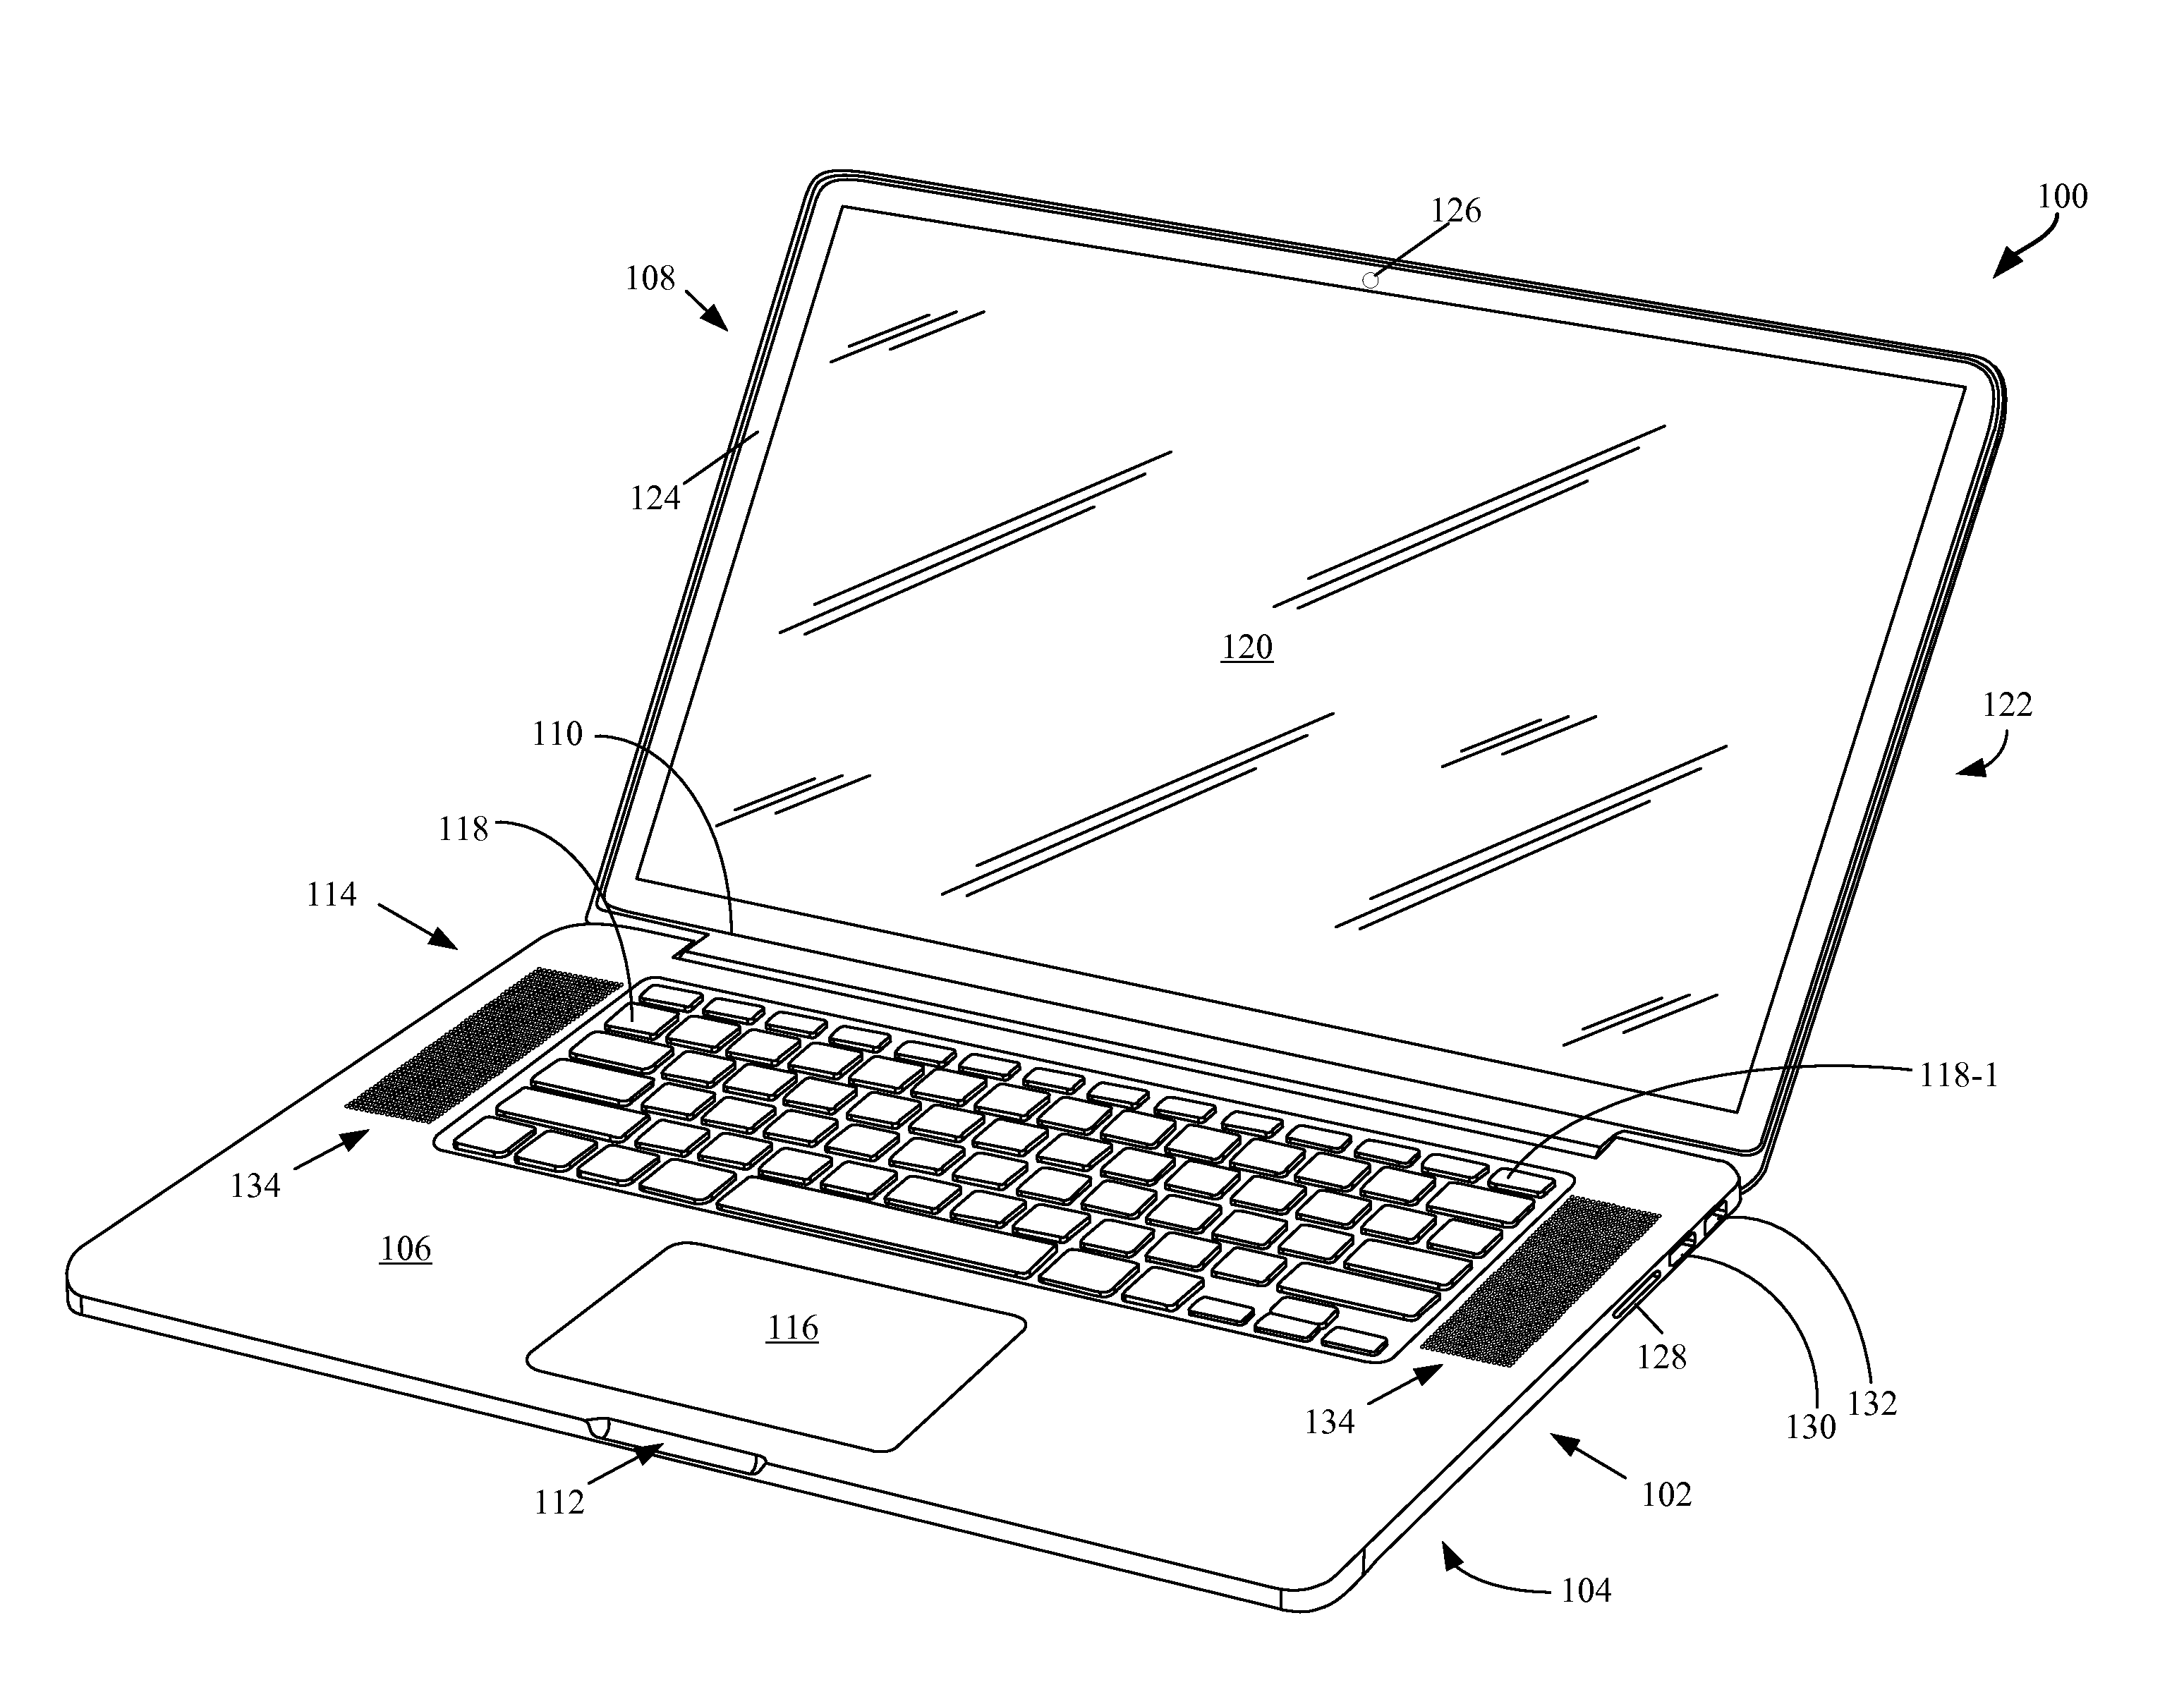 Portable computing device